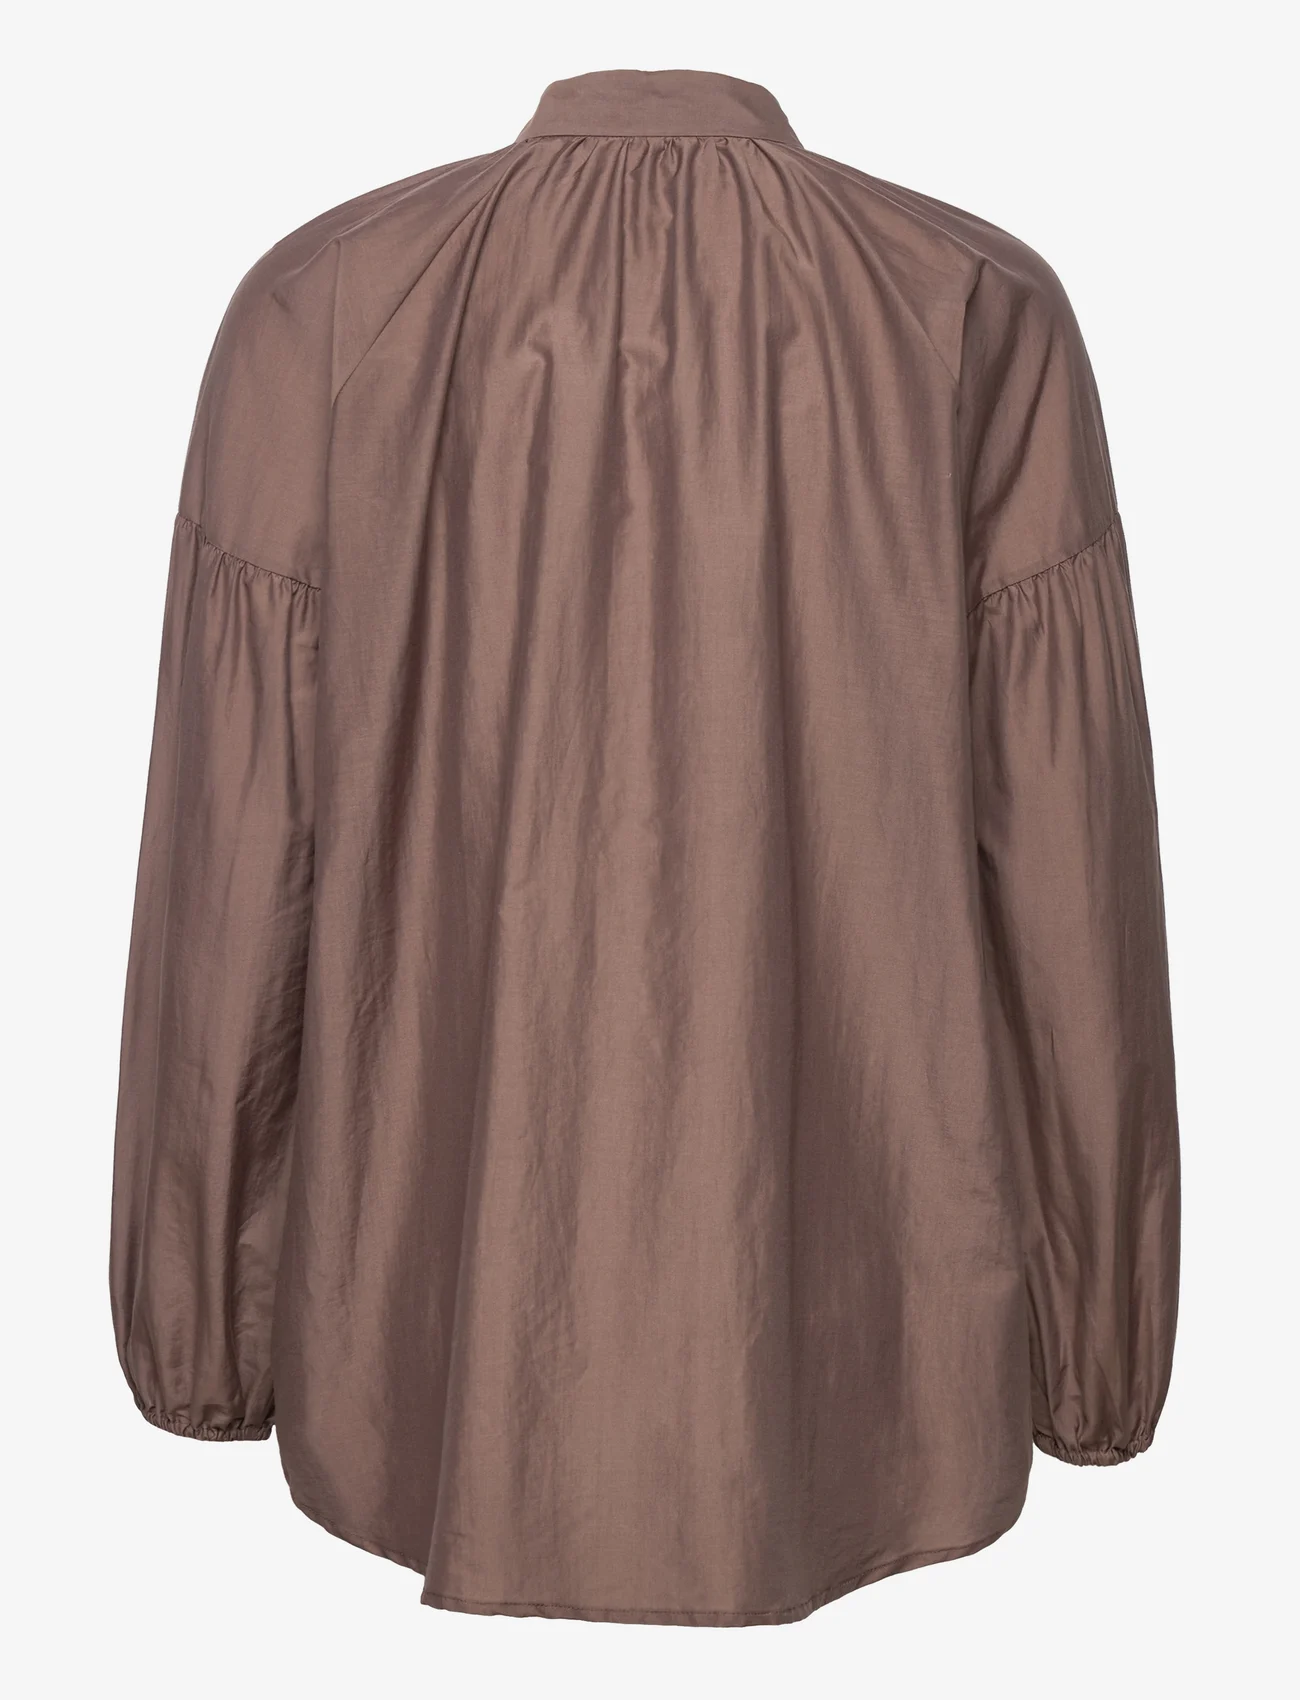 Cathrine Hammel - Cotton silk poem shirt - pitkähihaiset puserot - brown - 1